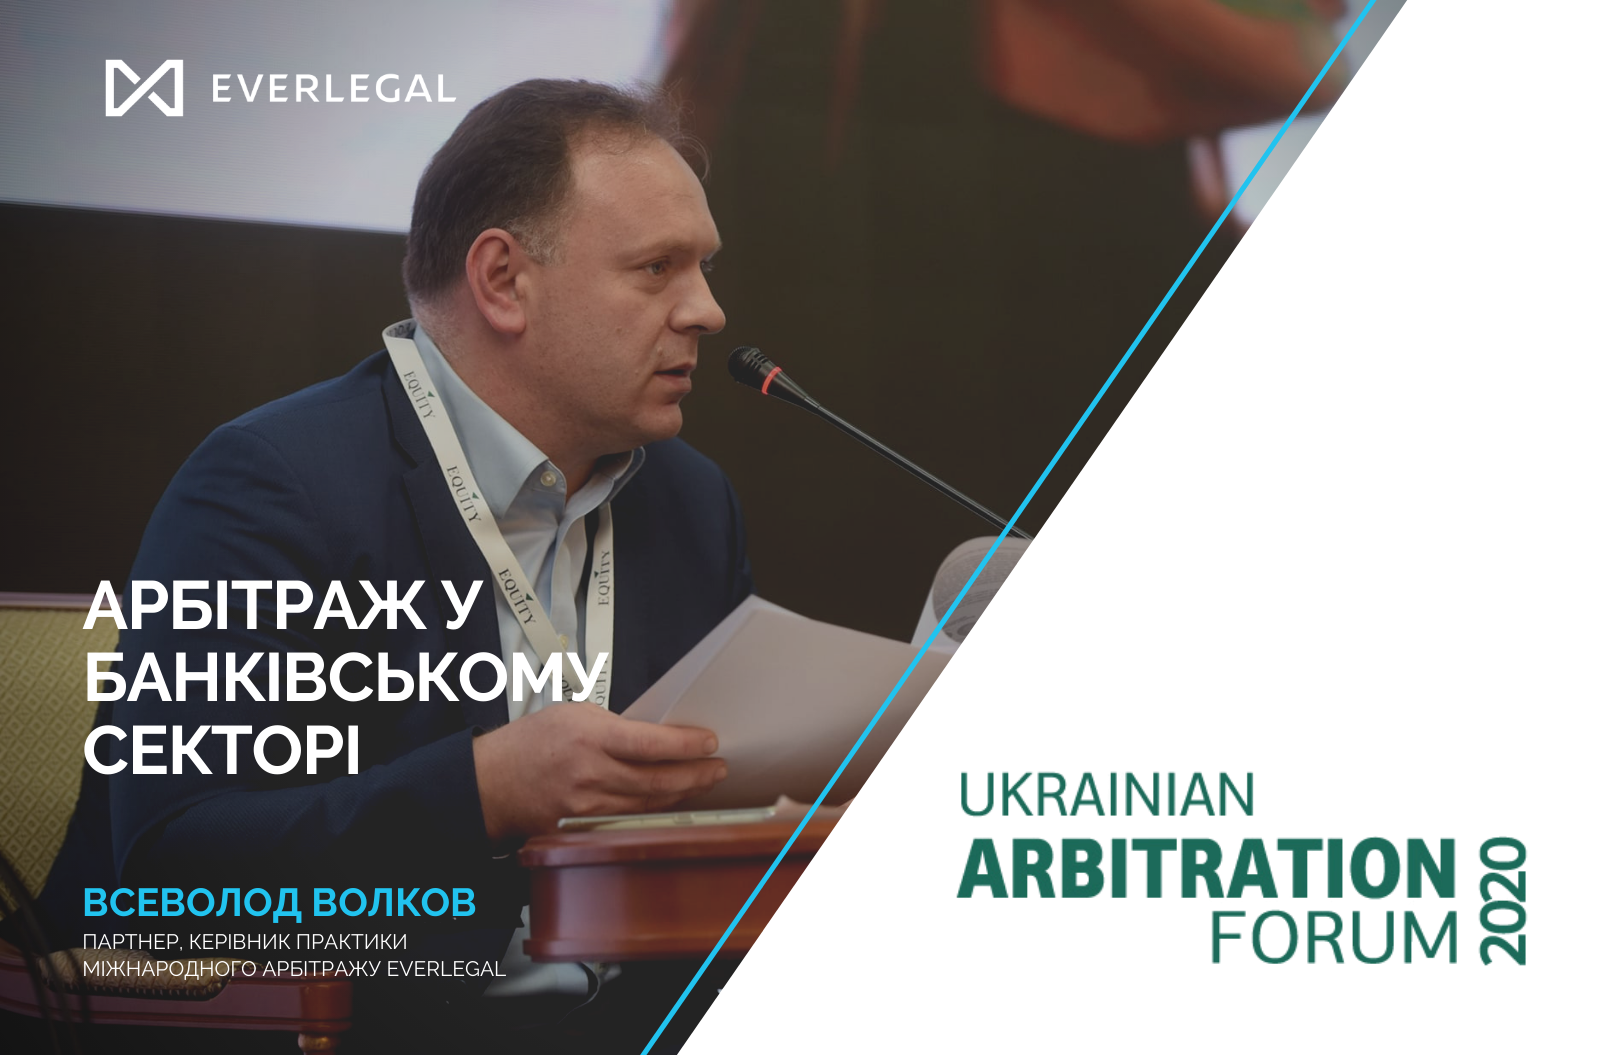 EVERLEGAL at Ukrainian Arbitration Forum 2020